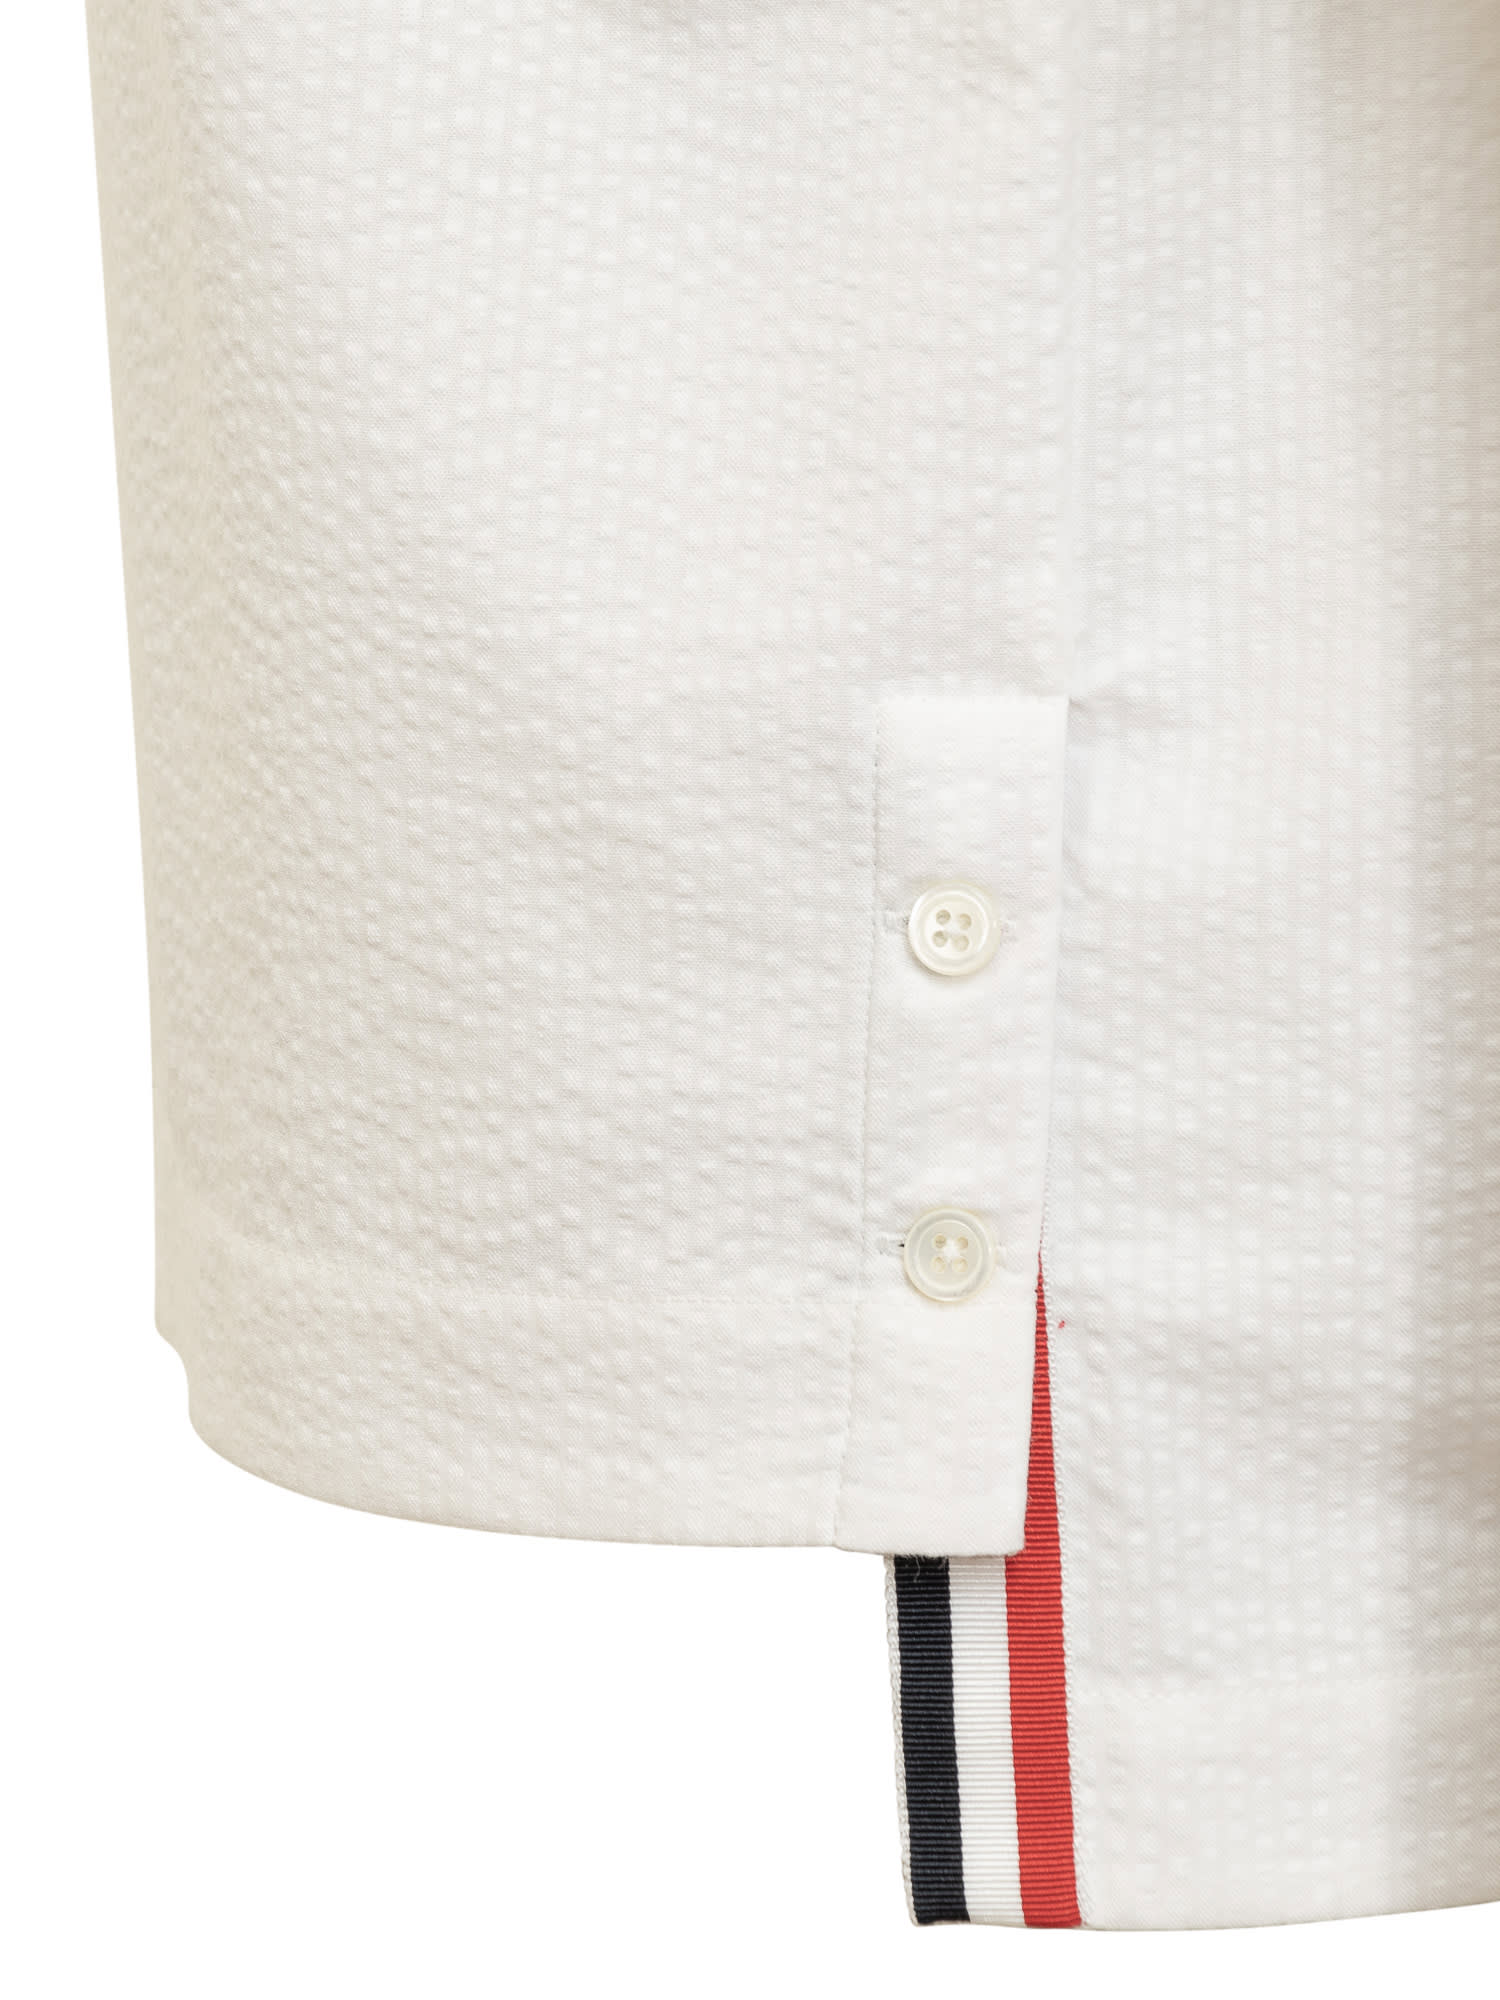 Shop Thom Browne Rwb Seersucker Polo Shirt In White